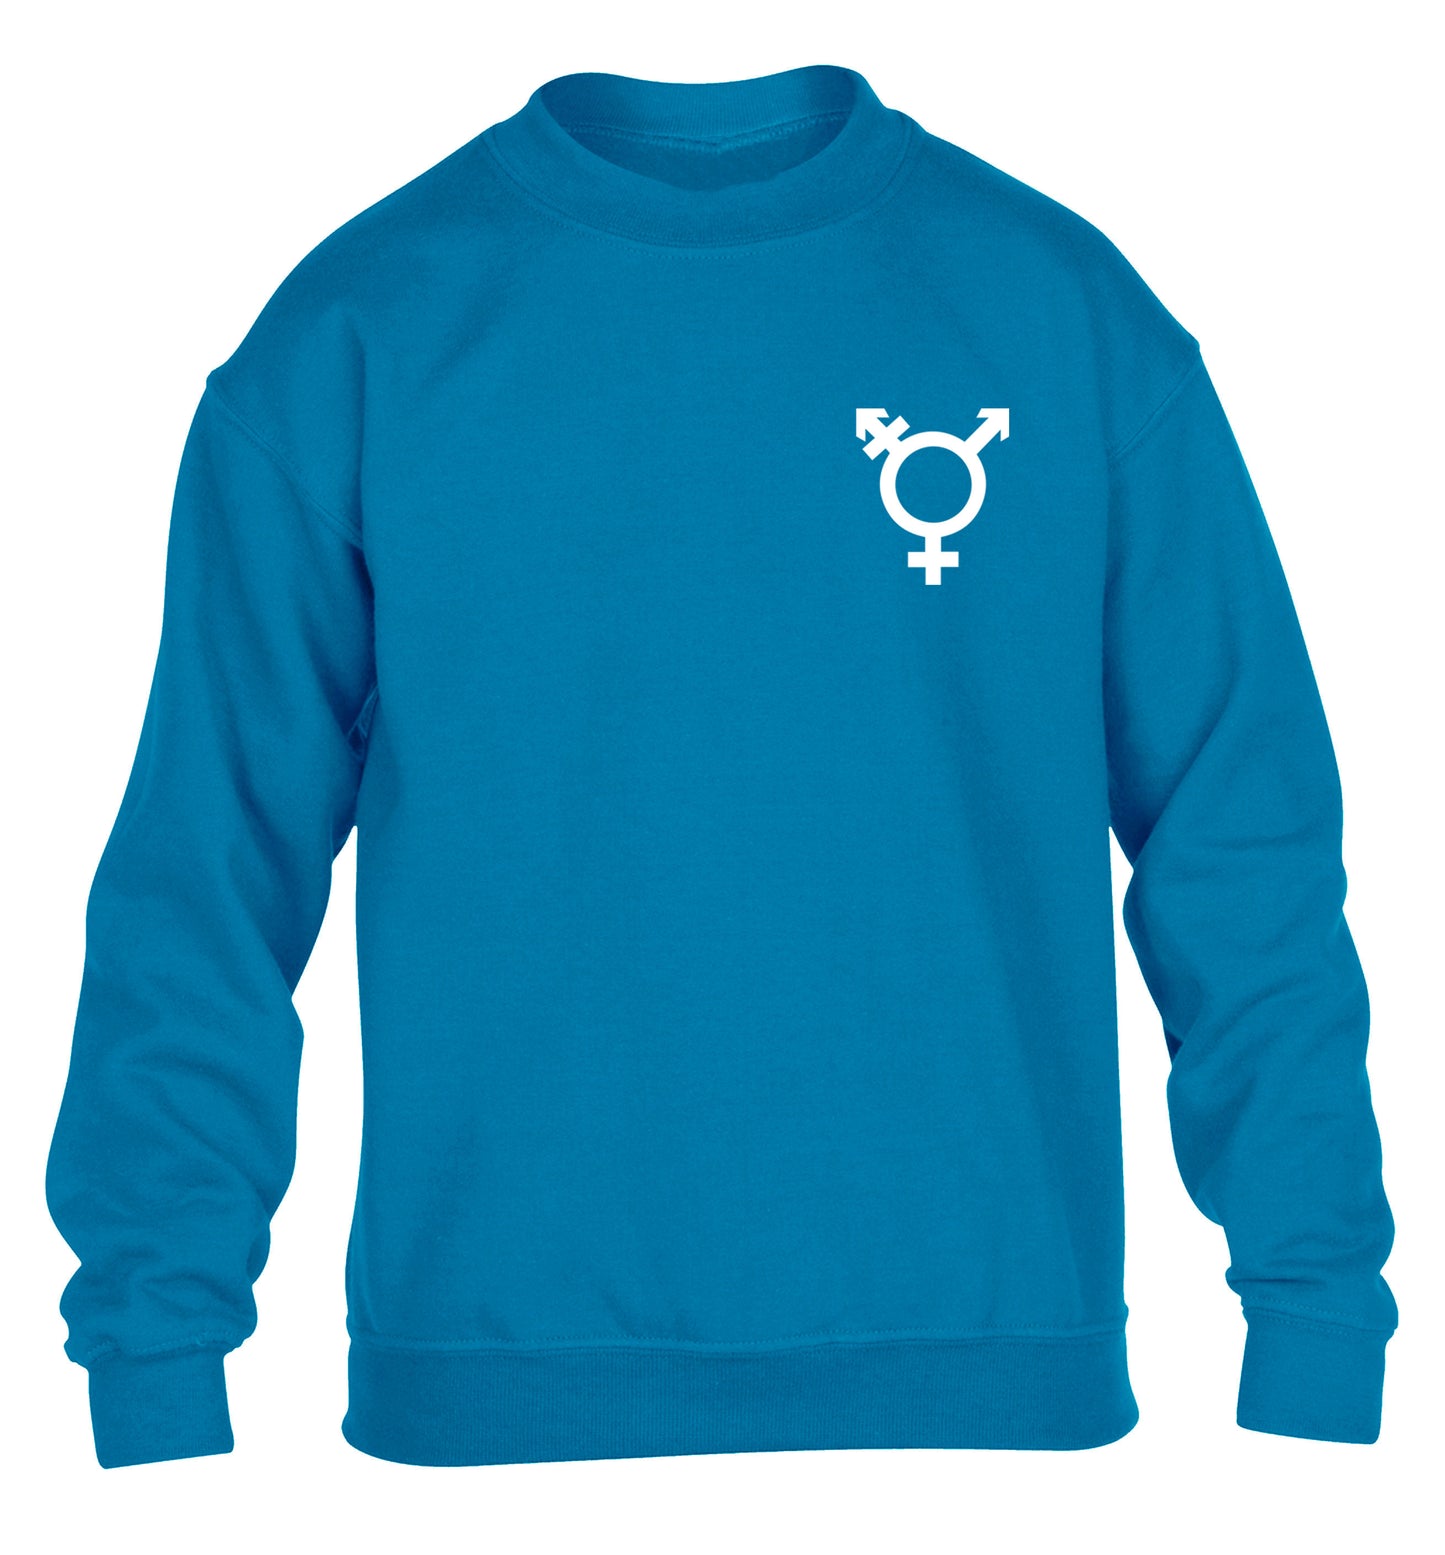 Trans gender symbol pocket children's blue sweater 12-14 Years